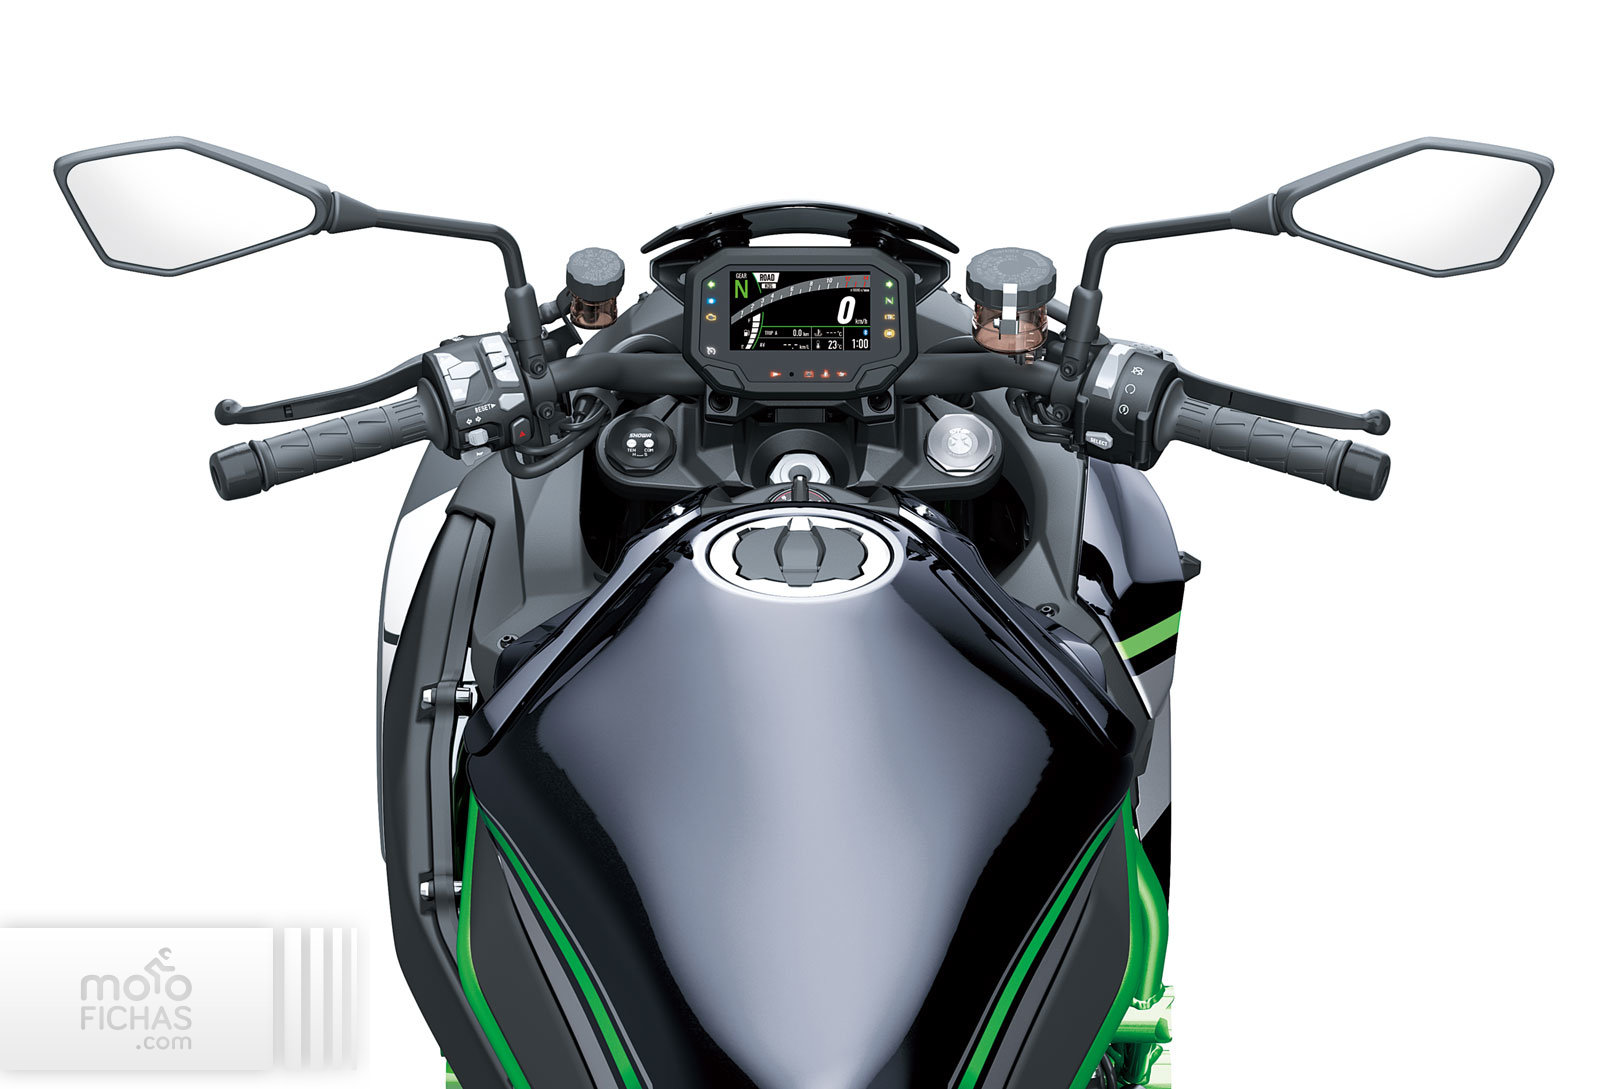 Comparativa Ducati Streetfighter V4 S 2020 Kawasaki Zh2 2020